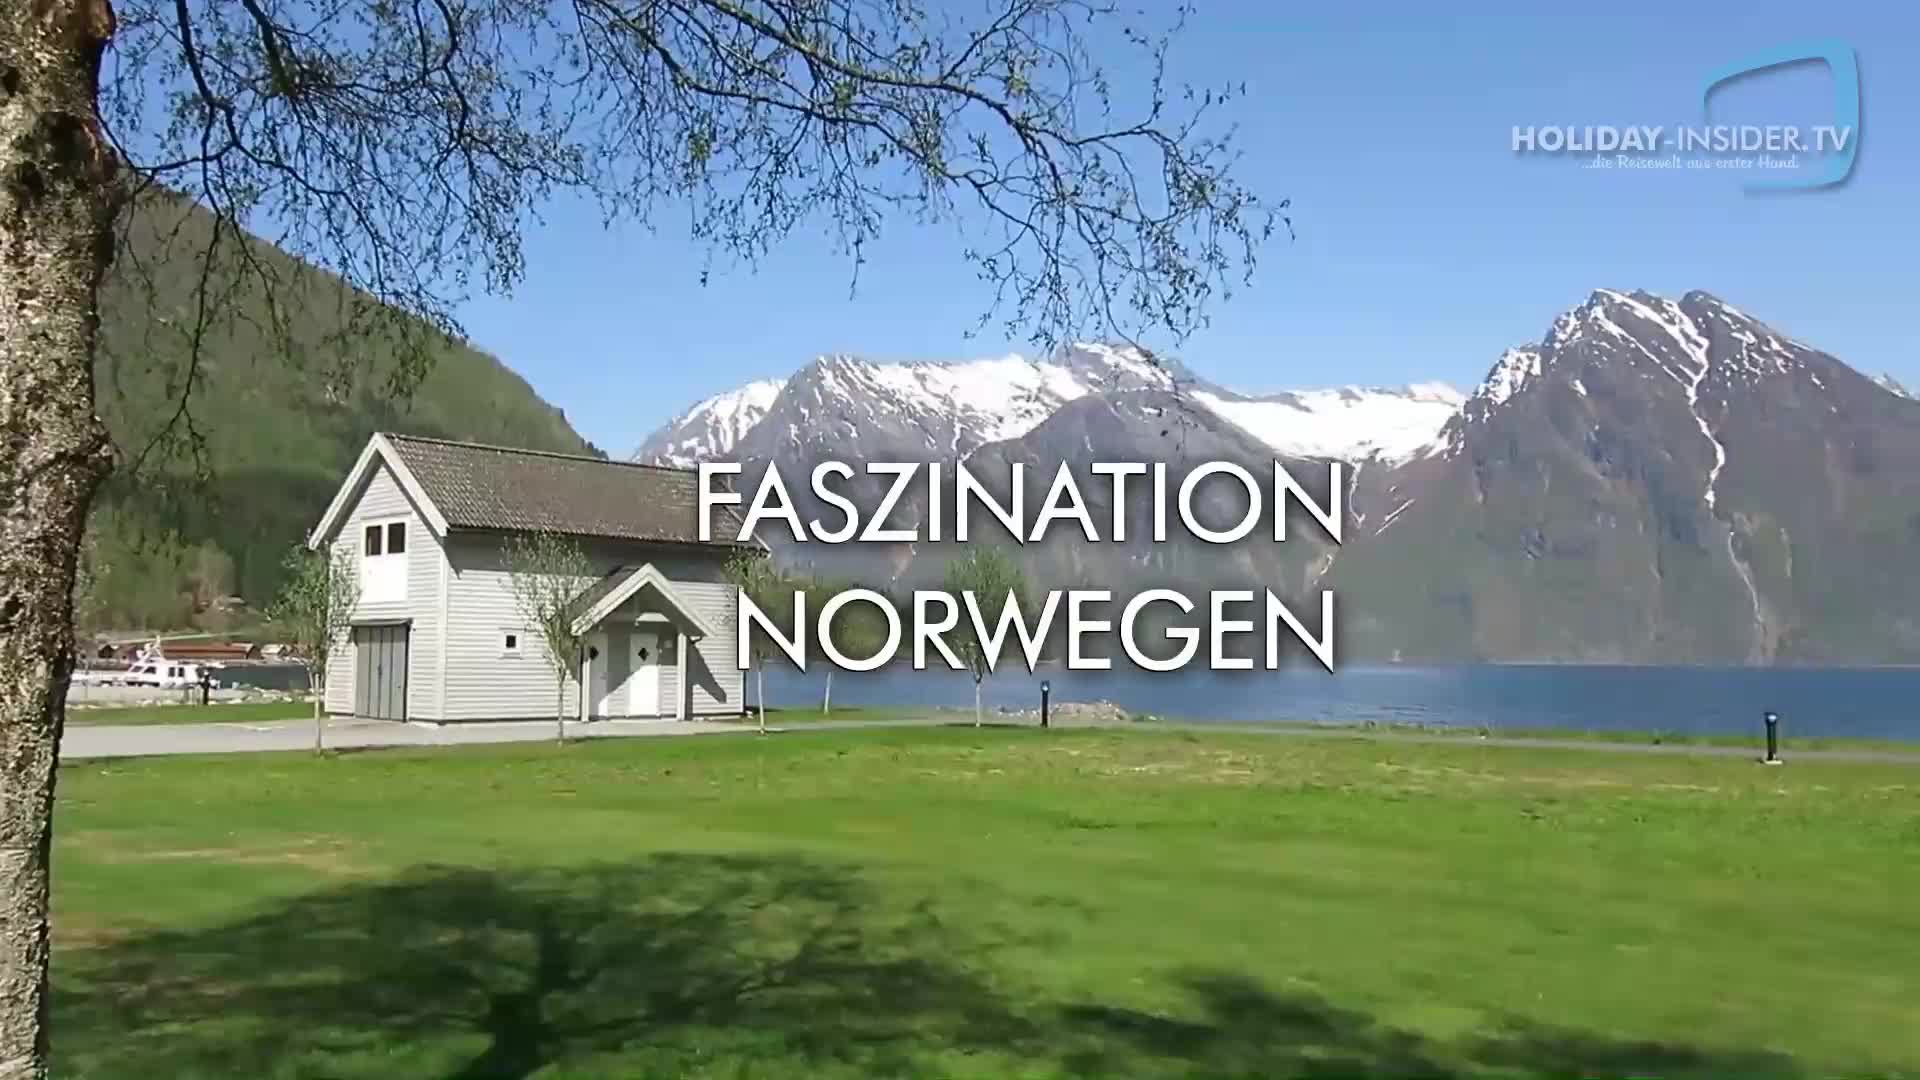 Faszination Norwegen: die Magie des Nordens